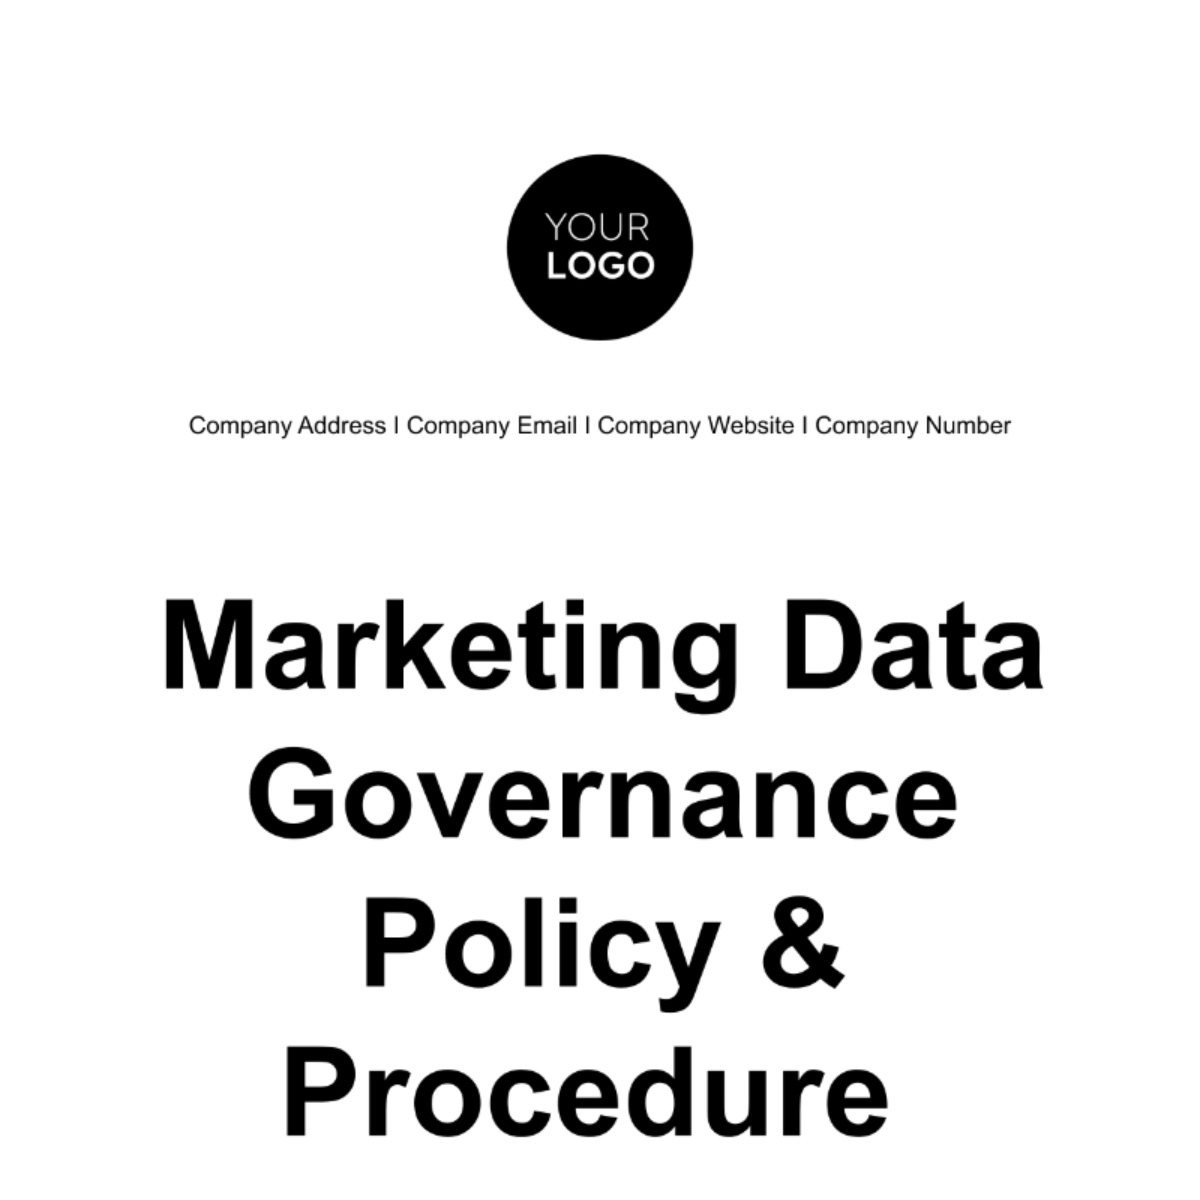 Marketing Data Governance Policy & Procedure Template